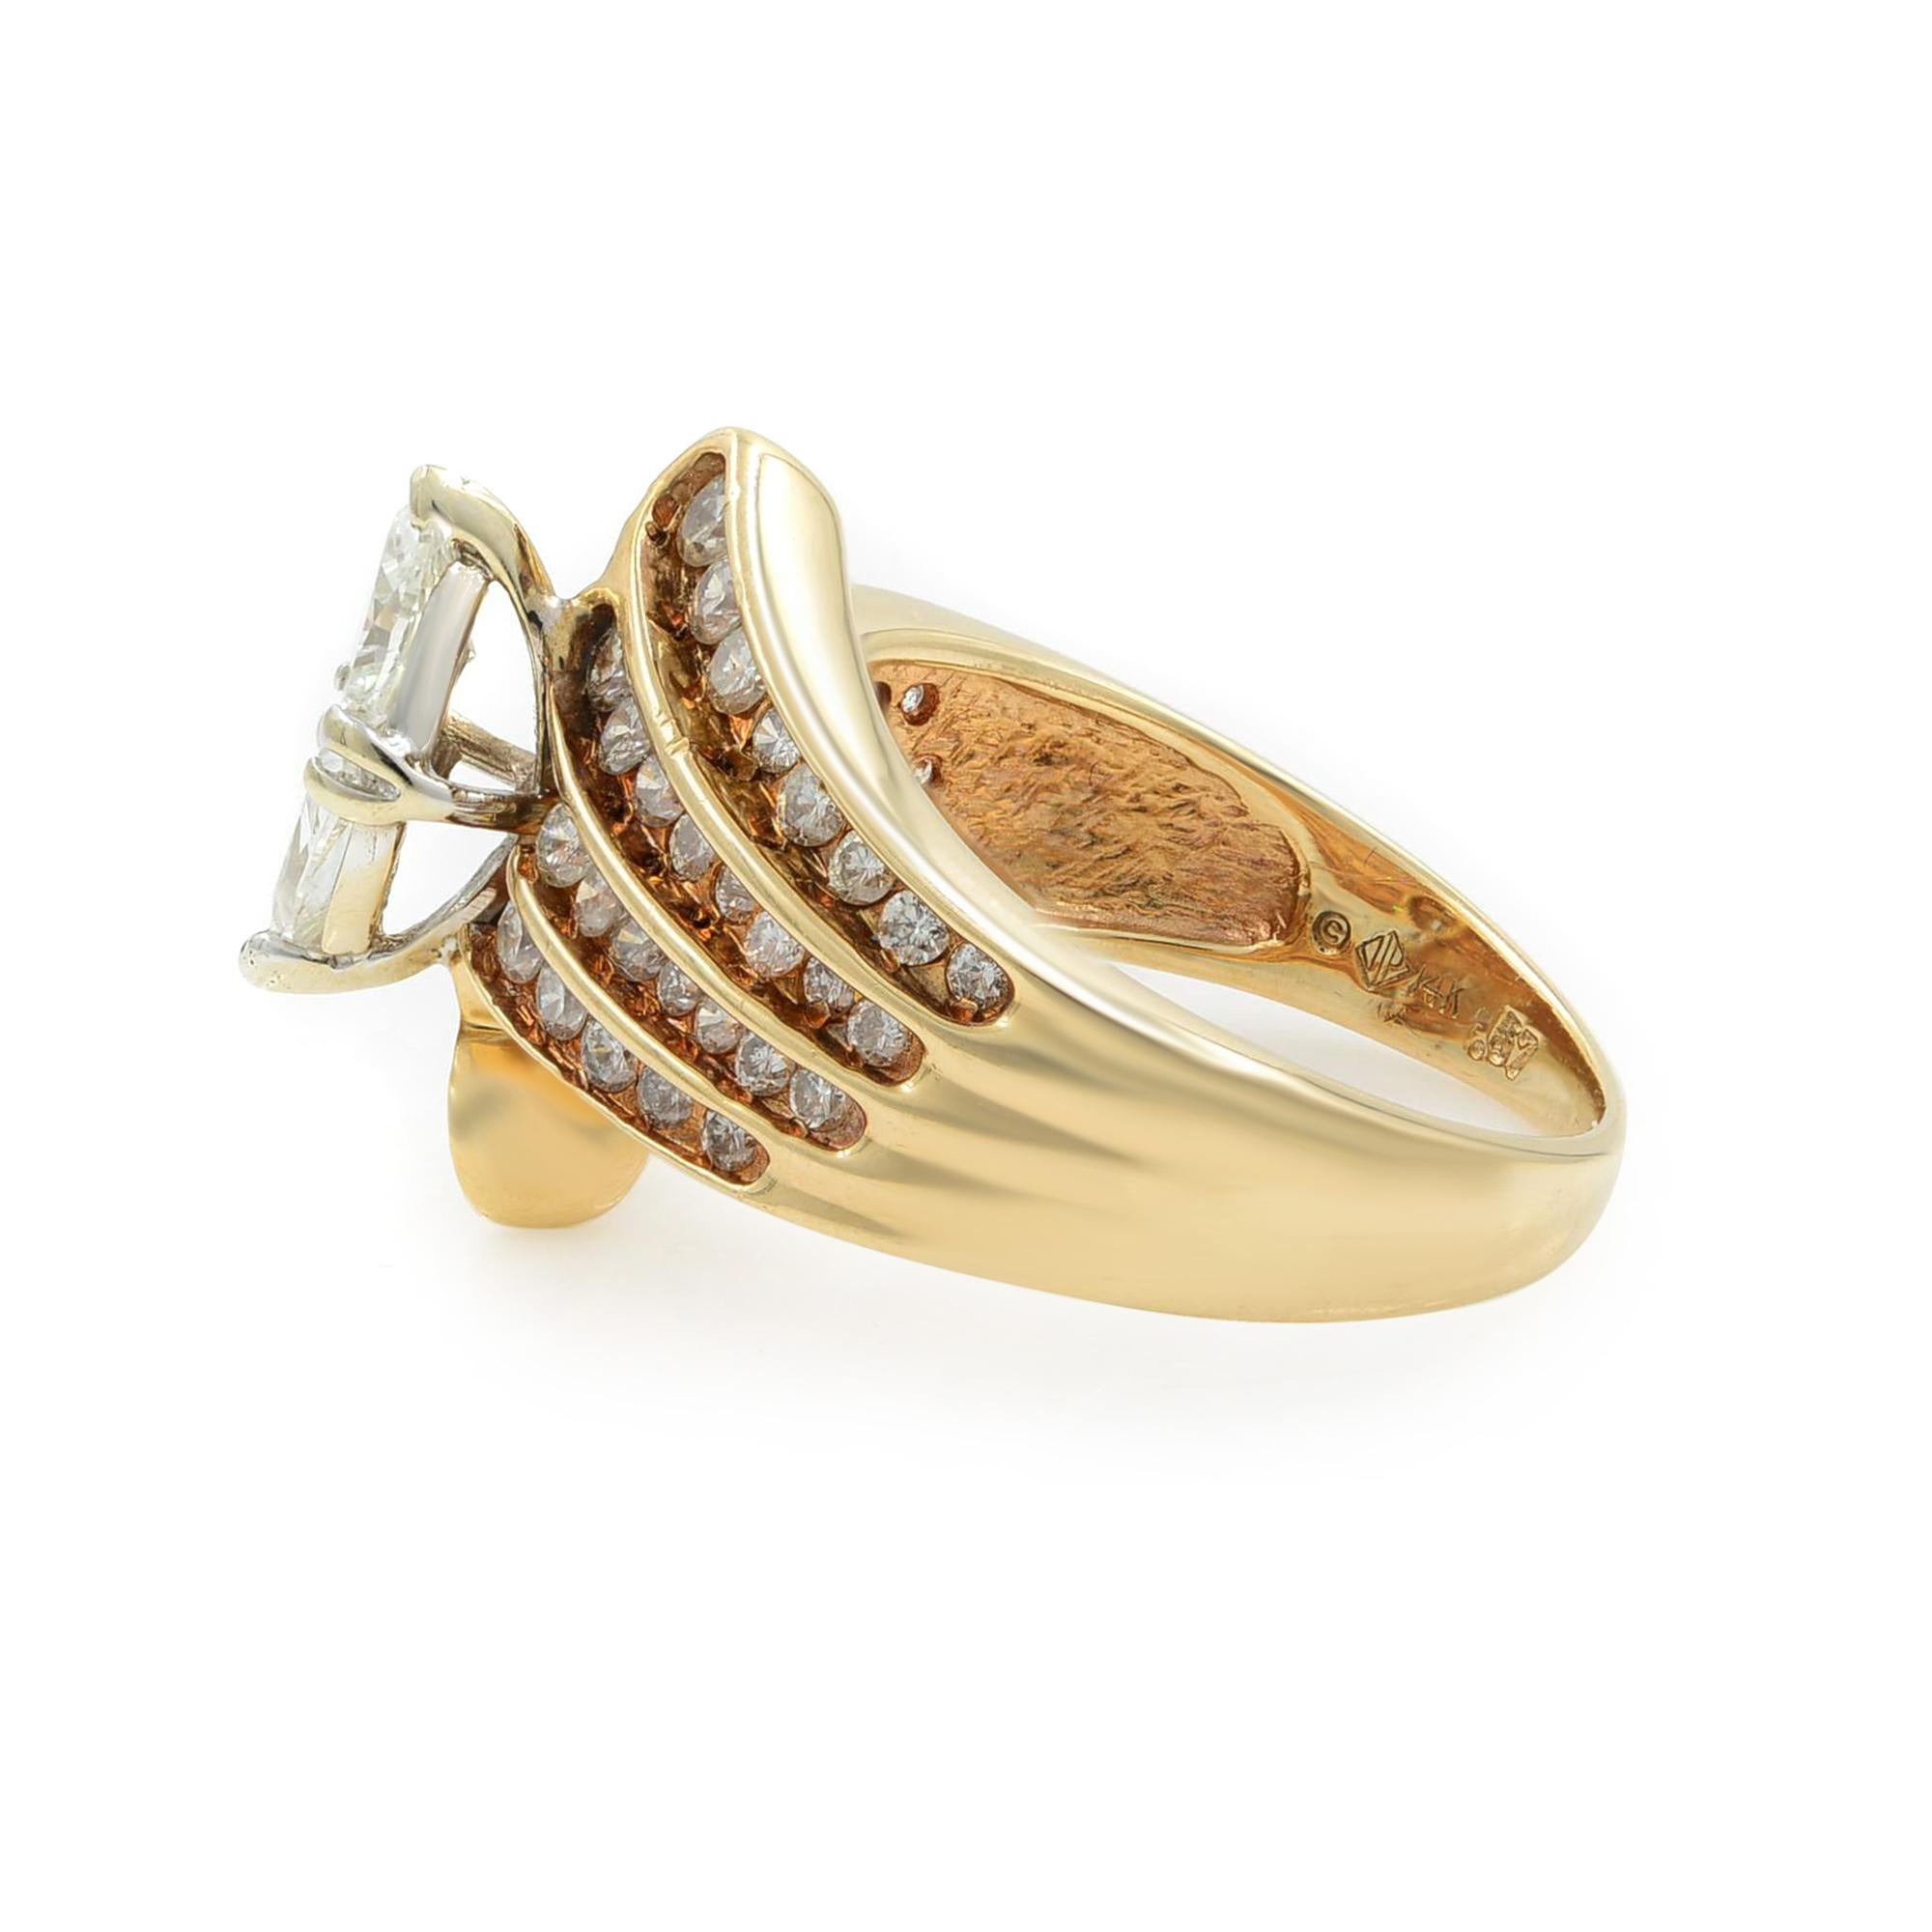 Modern Rachel Koen Marquise Illusion Diamond Engagement Ring 14K Gold 1.75 Cttw SZ 6.75 For Sale